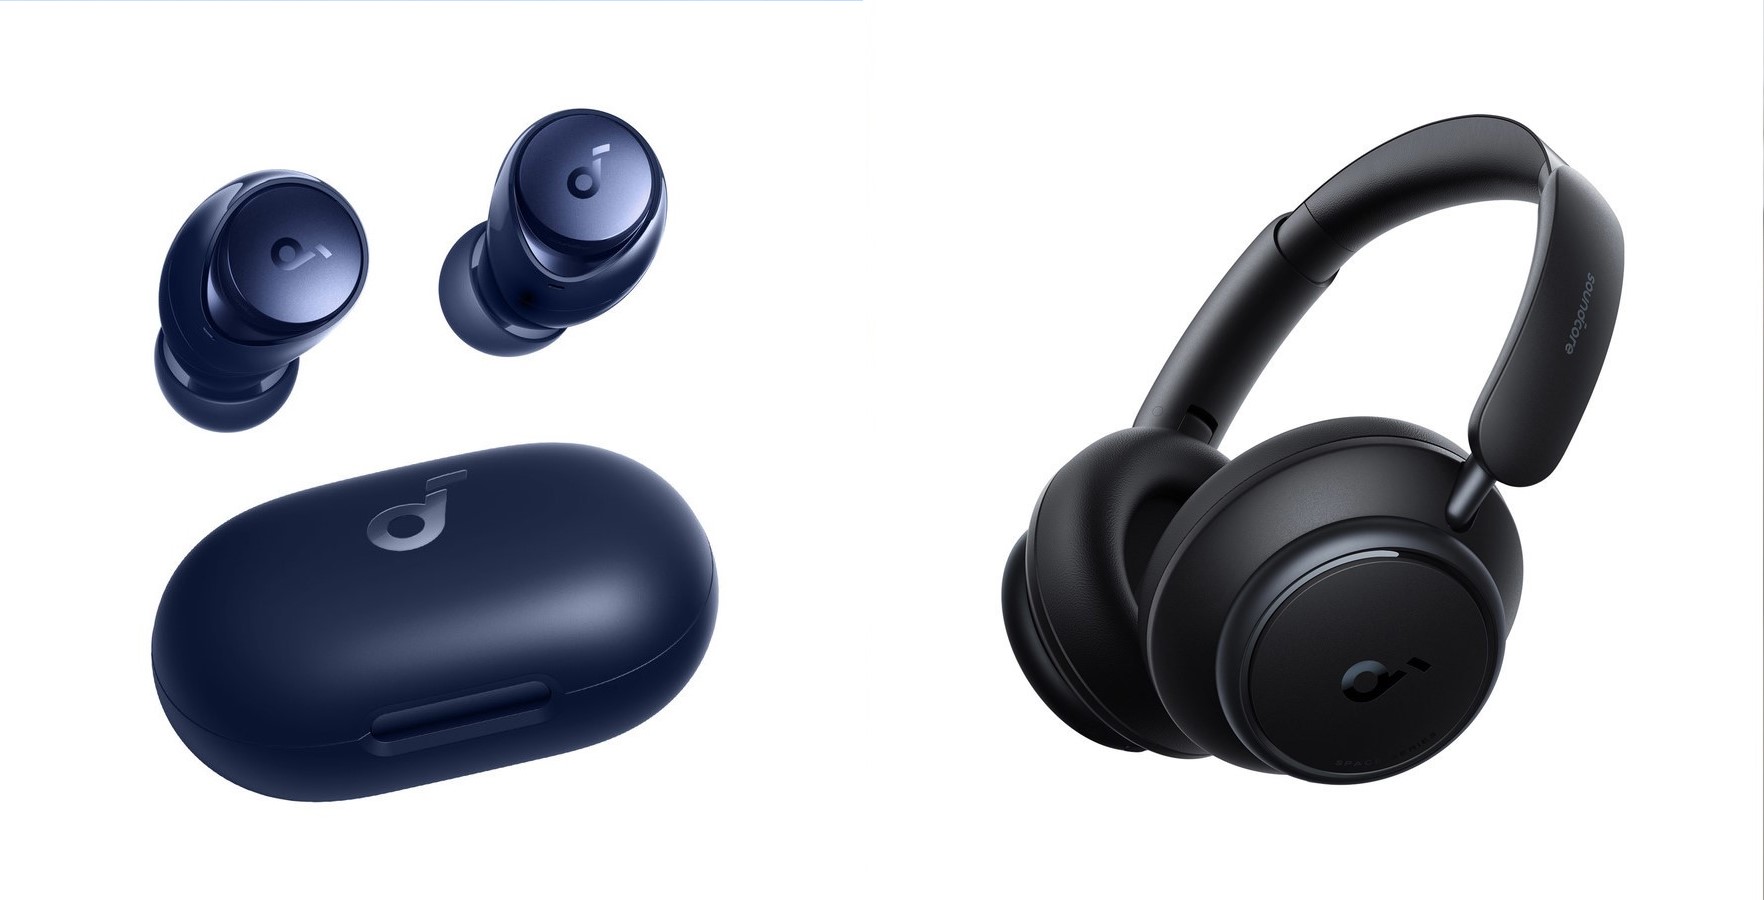 Anker Soundcore Liberty 4 NC Earbuds TWS Headphones, Adaptive ANC 2.0,  Bluetooth 5.3 - Blue 